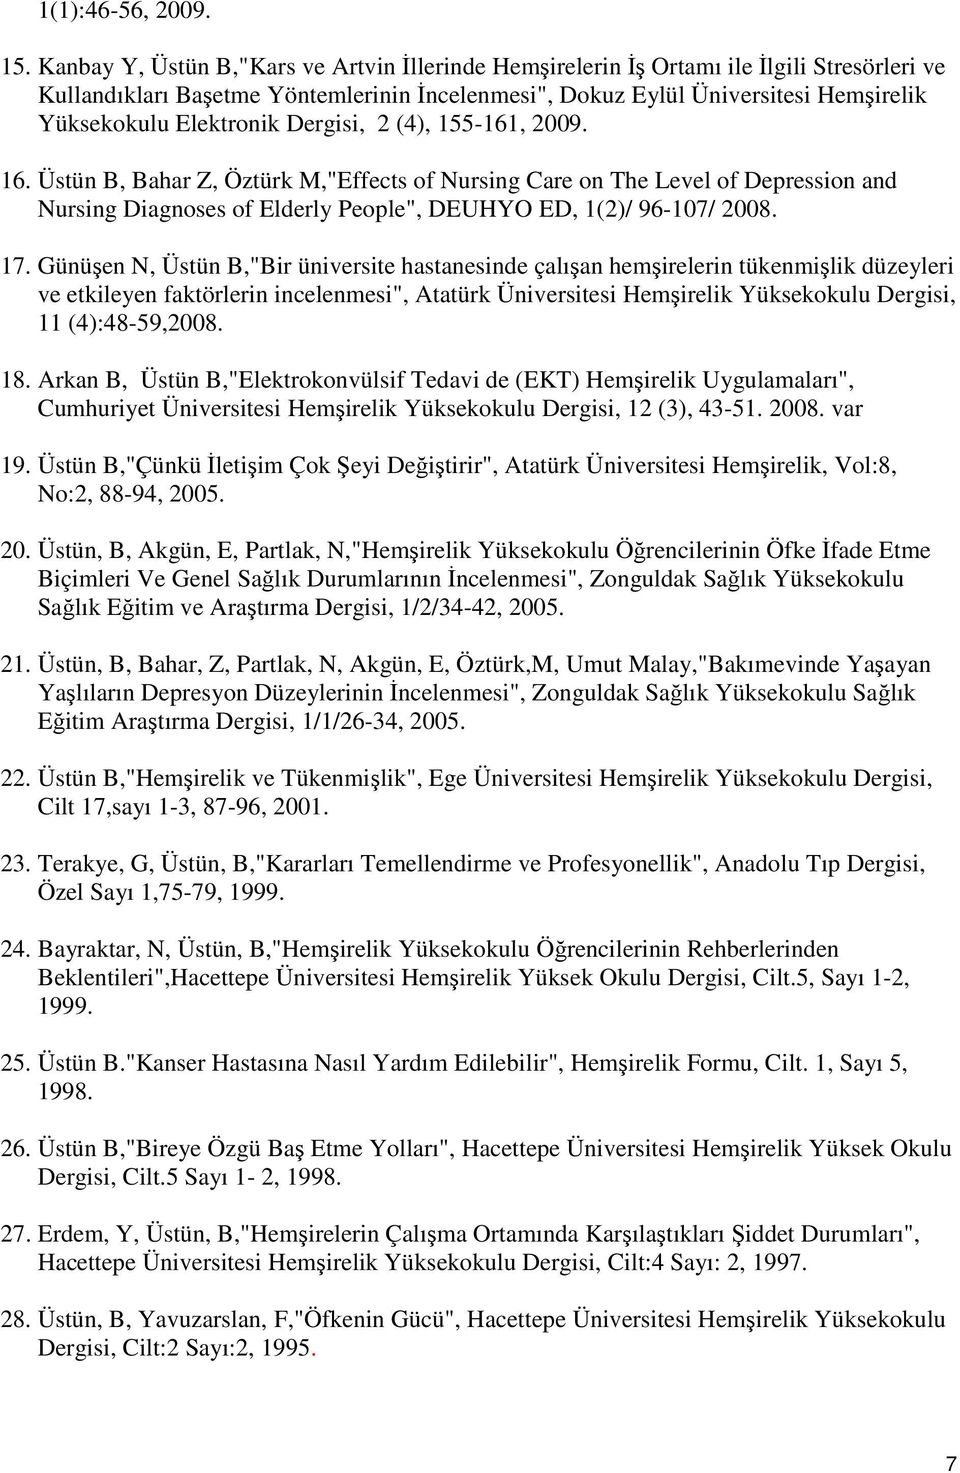 Elektronik Dergisi, 2 (4), 155-161, 2009. 16. Üstün B, Bahar Z, Öztürk M,"Effects of Nursing Care on The Level of Depression and Nursing Diagnoses of Elderly People", DEUHYO ED, 1(2)/ 96-107/ 2008.